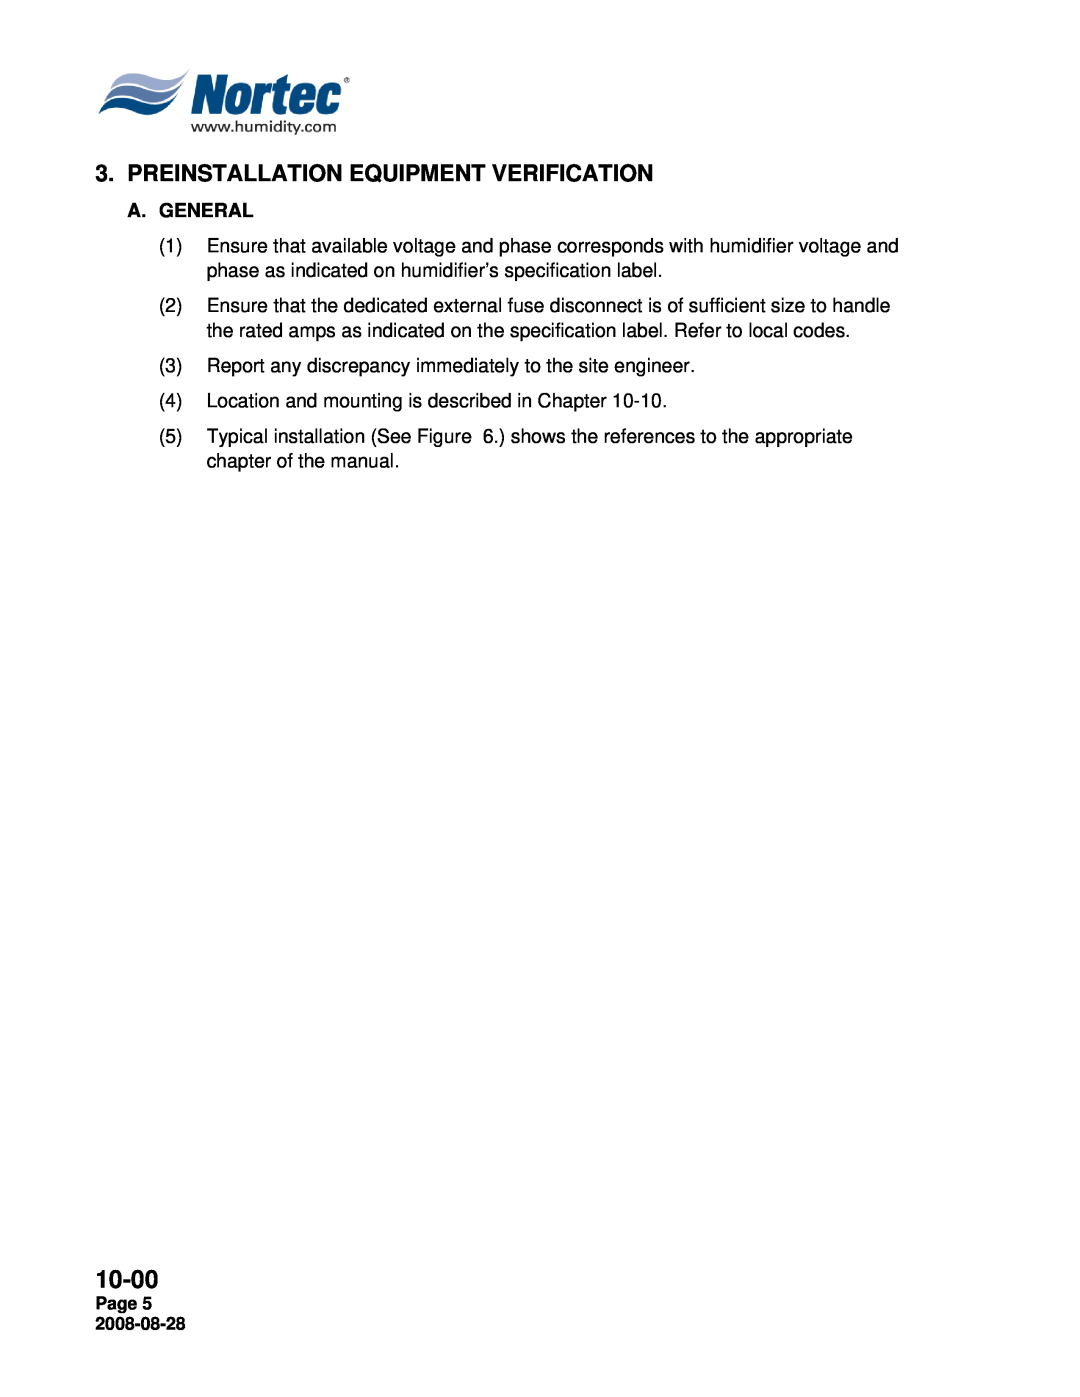 Nortec NH Series installation manual Preinstallation Equipment Verification, 10-00, A.General 